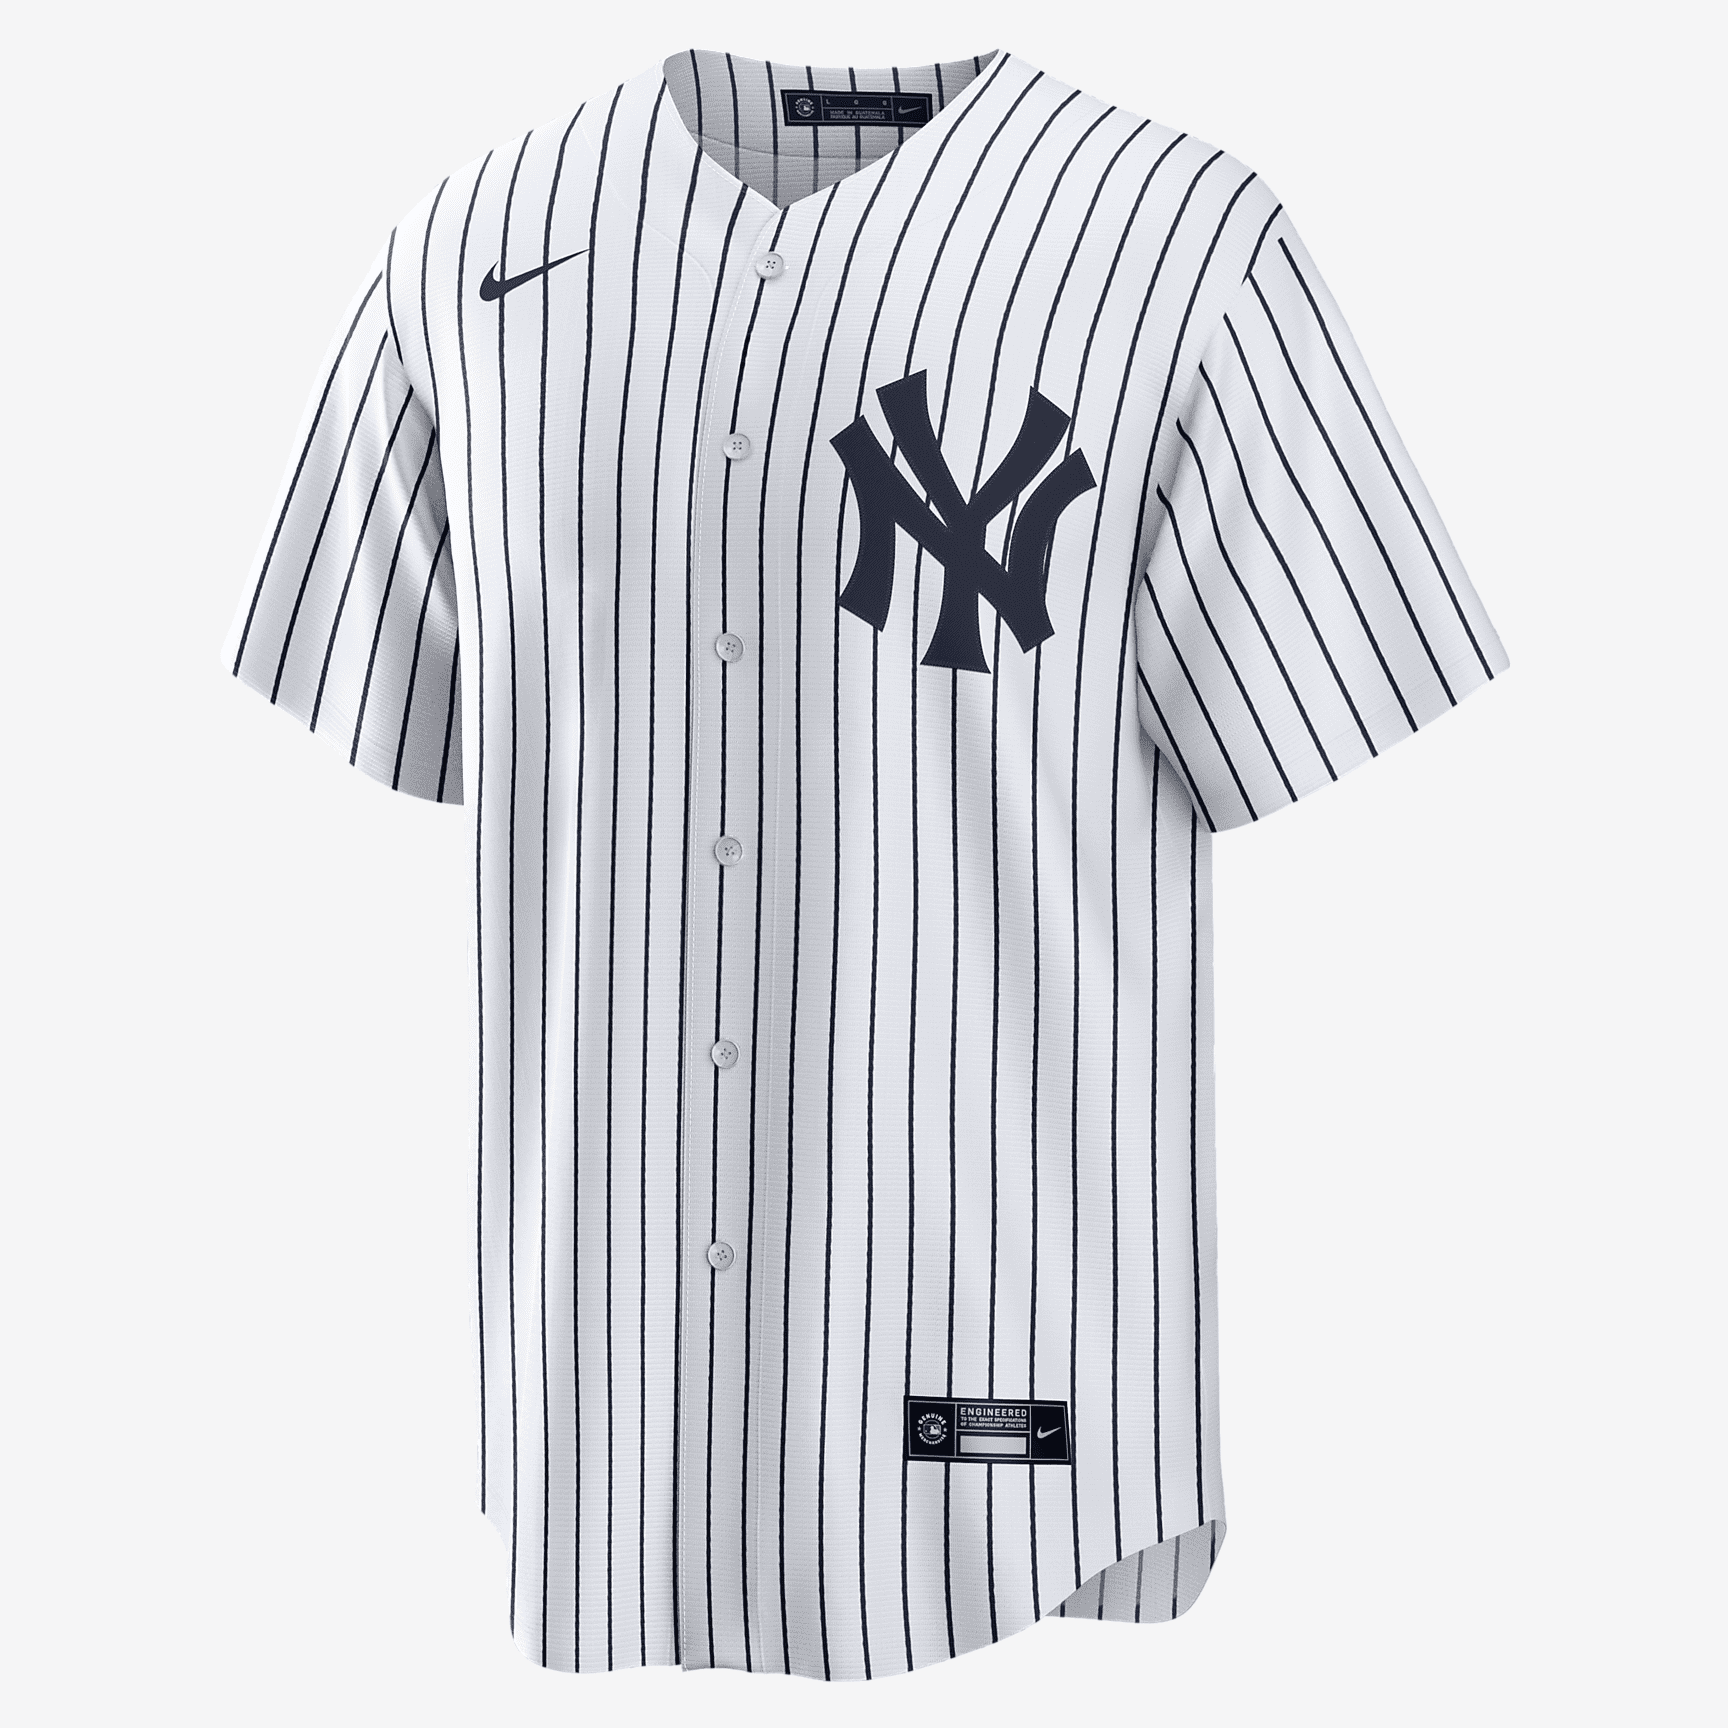 MLB New York Yankees (Josh Donaldson) Men's Replica Baseball Jersey.